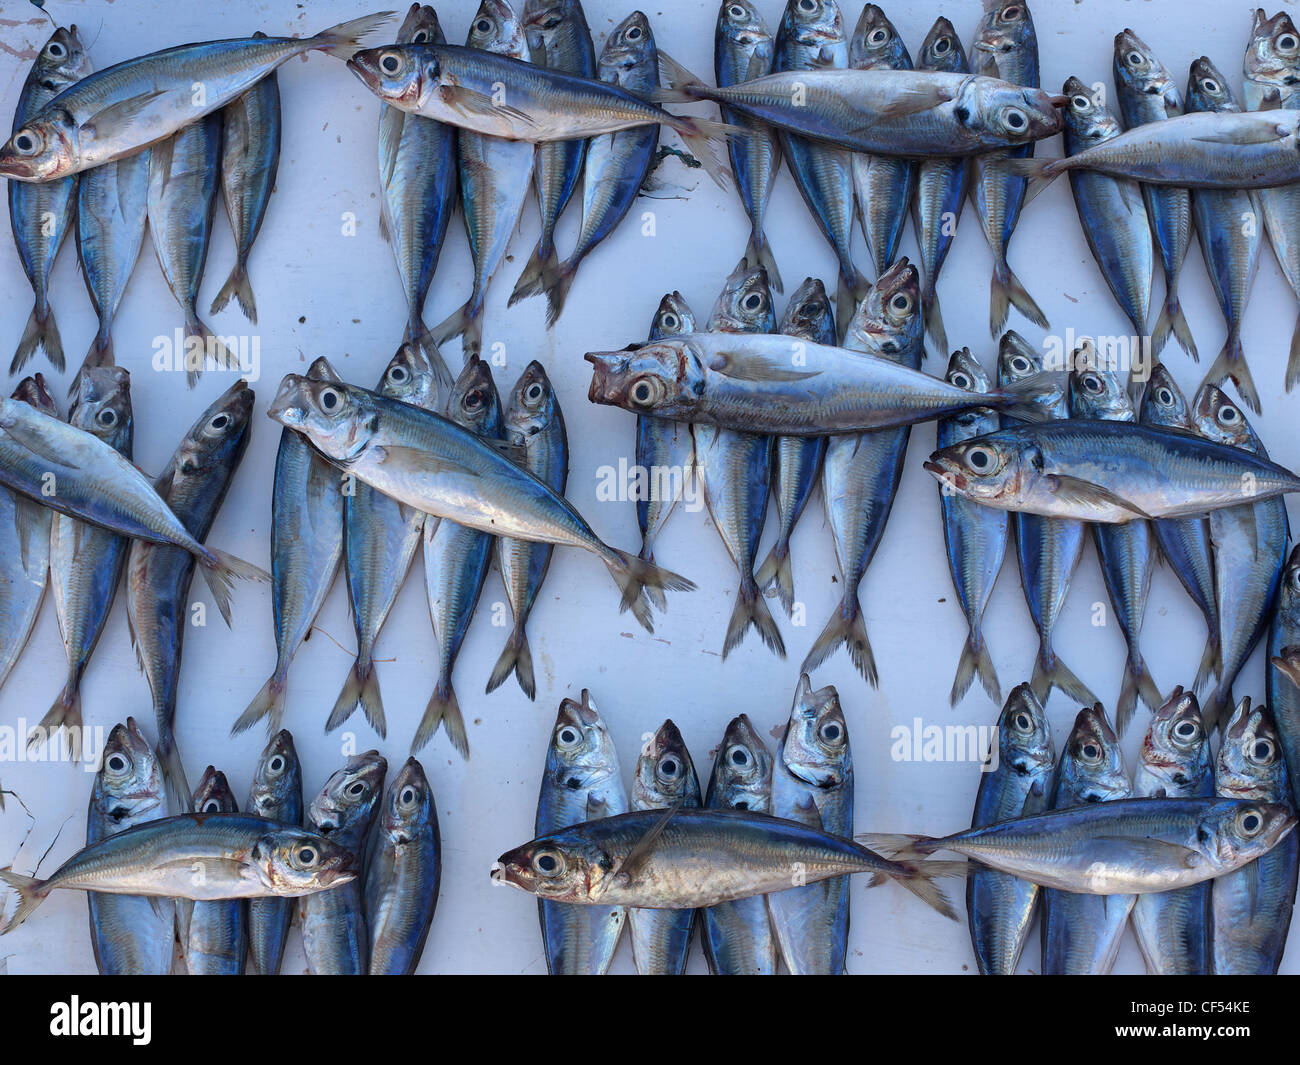 Morocco, Essaouira, Fishes in fish market Stock Photo